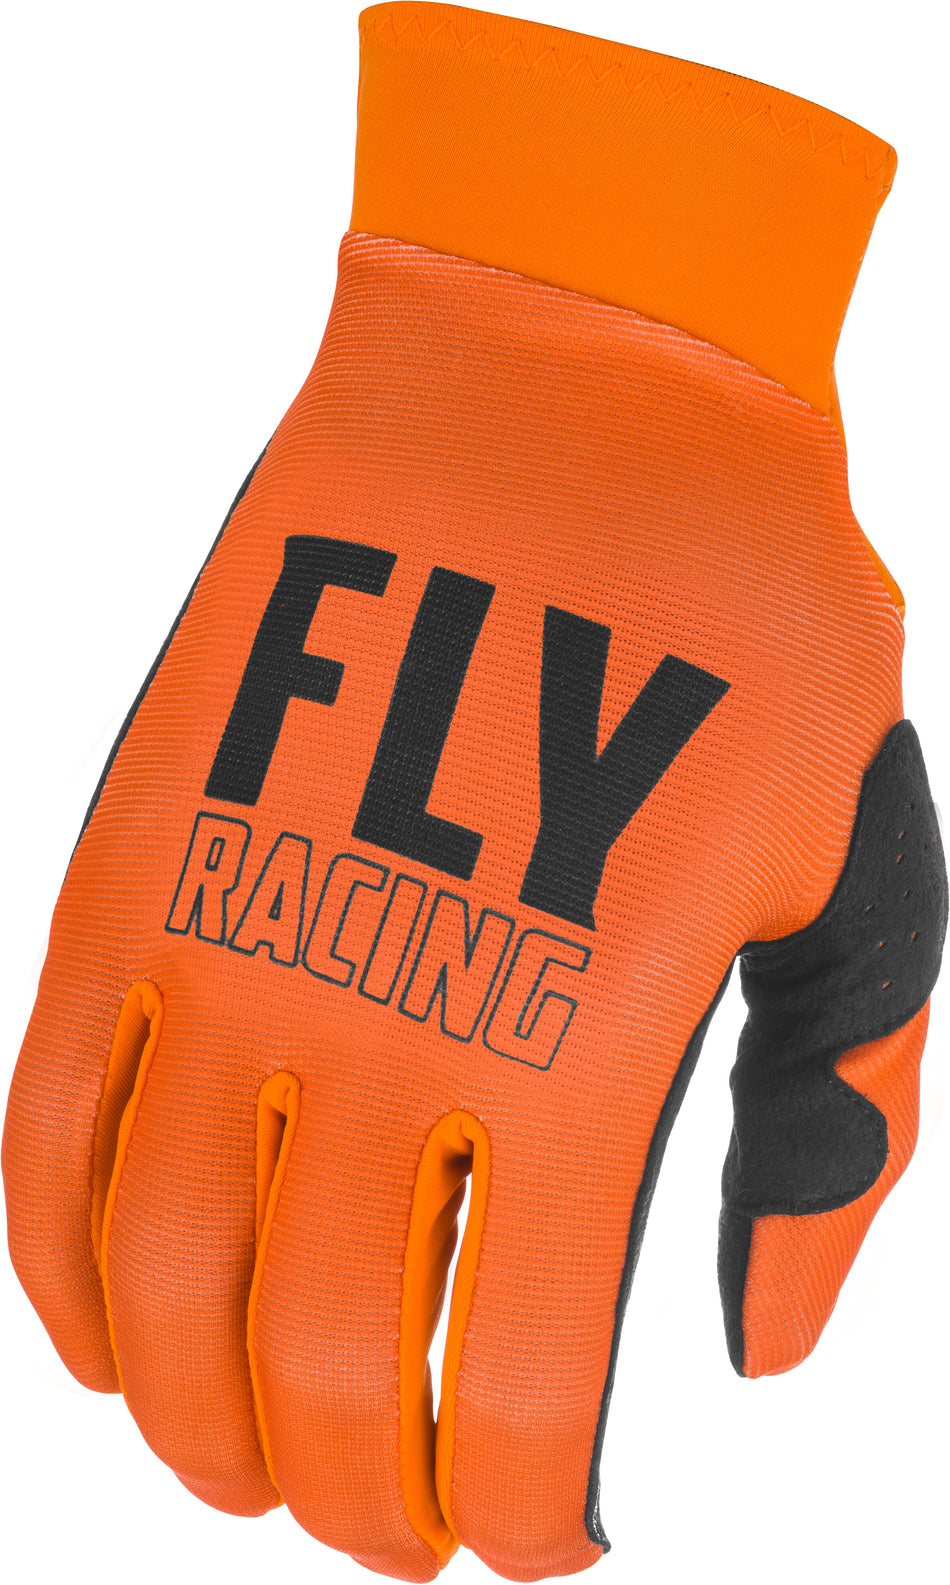 FLY RACING Pro Lite Gloves Orange/Black Sz 10 374-85810